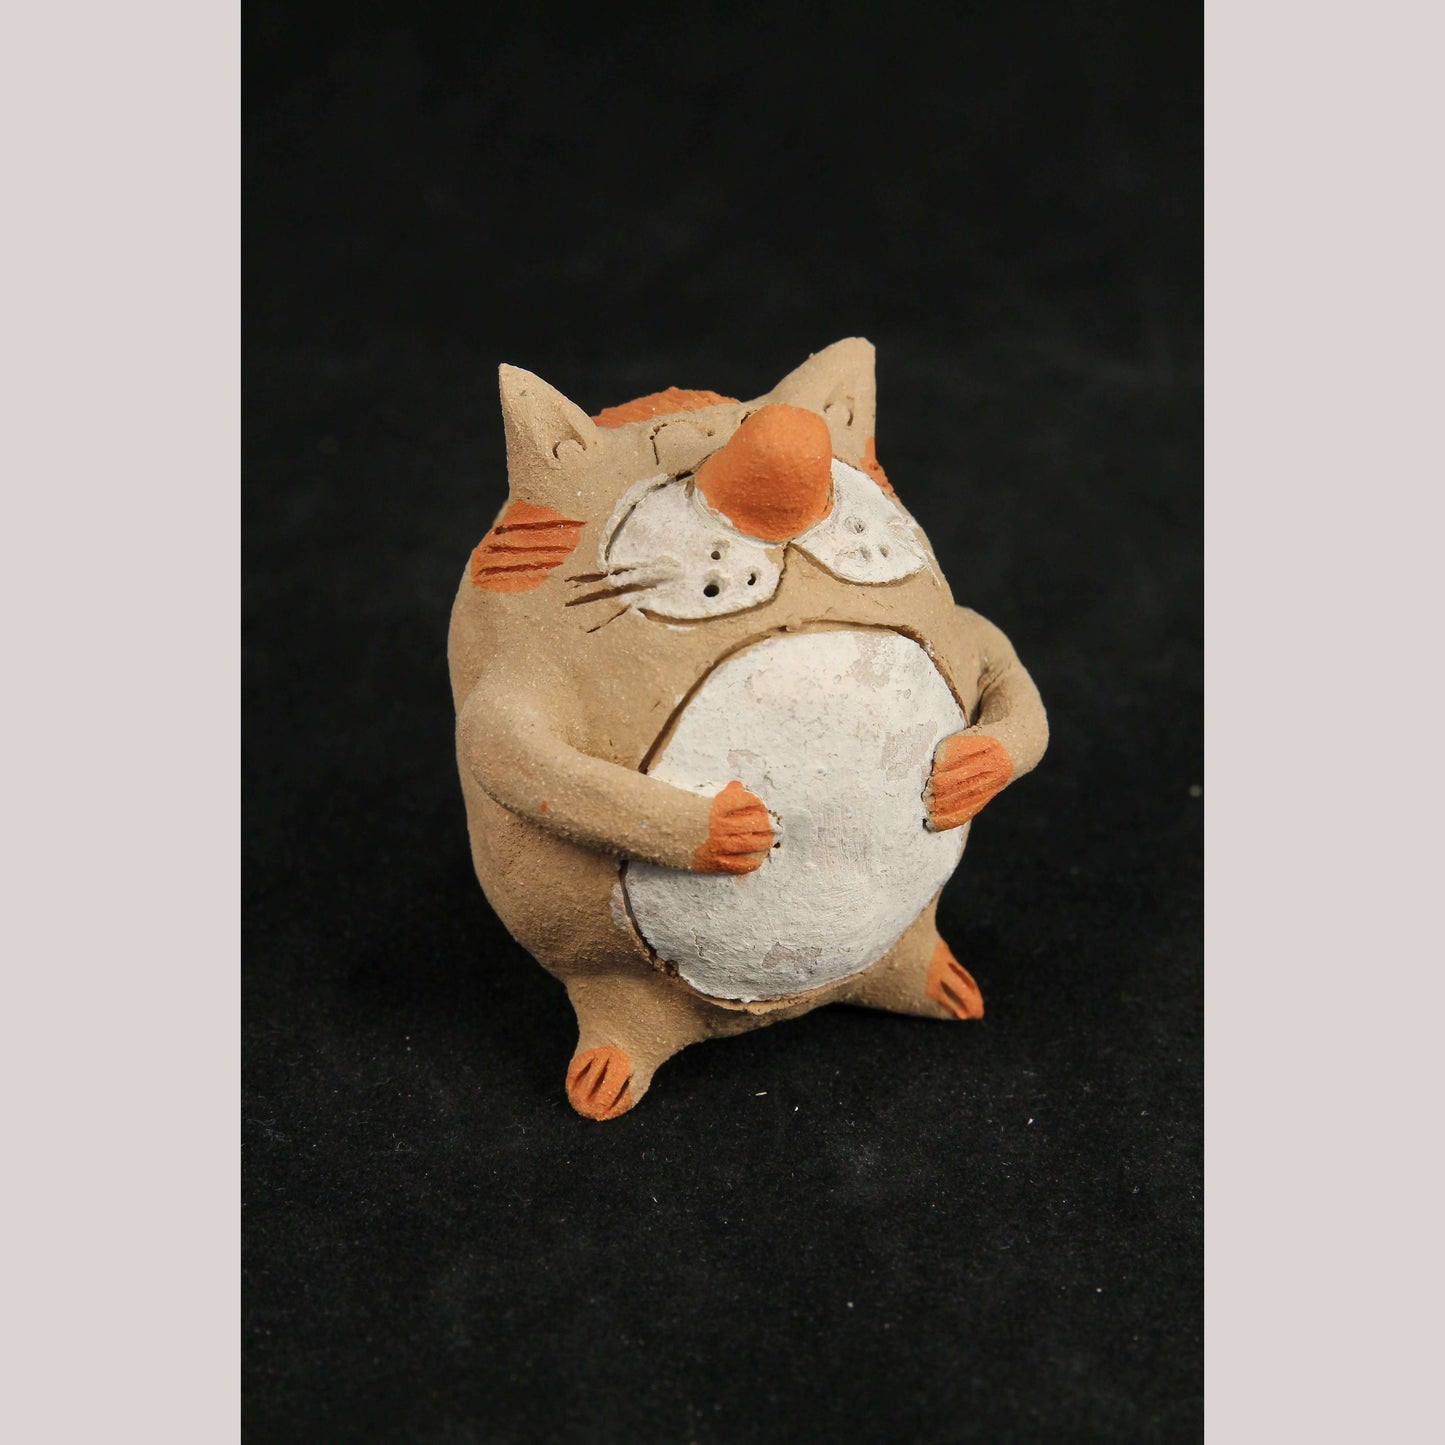 New Ceramic "Fat Cat" Mexican Folk Art Hand Made/Paint Pottery/Clay Décor